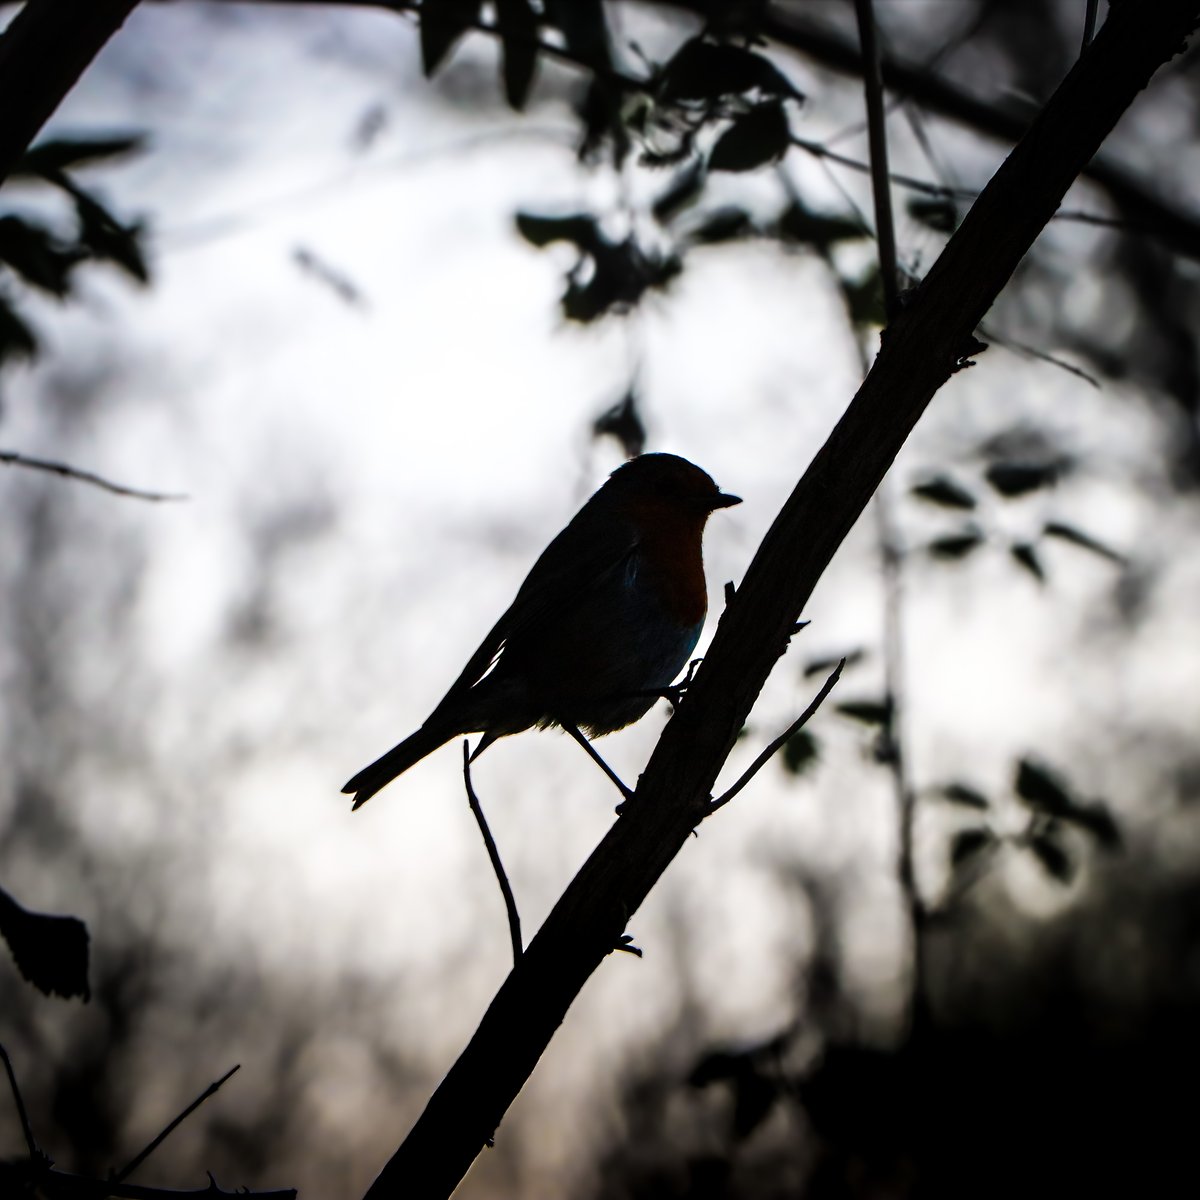 Robin all my light 
#Robin #LowLightPhotography #birdphotography #ShotWithCanon #photography #wildlife #wildlifephotography